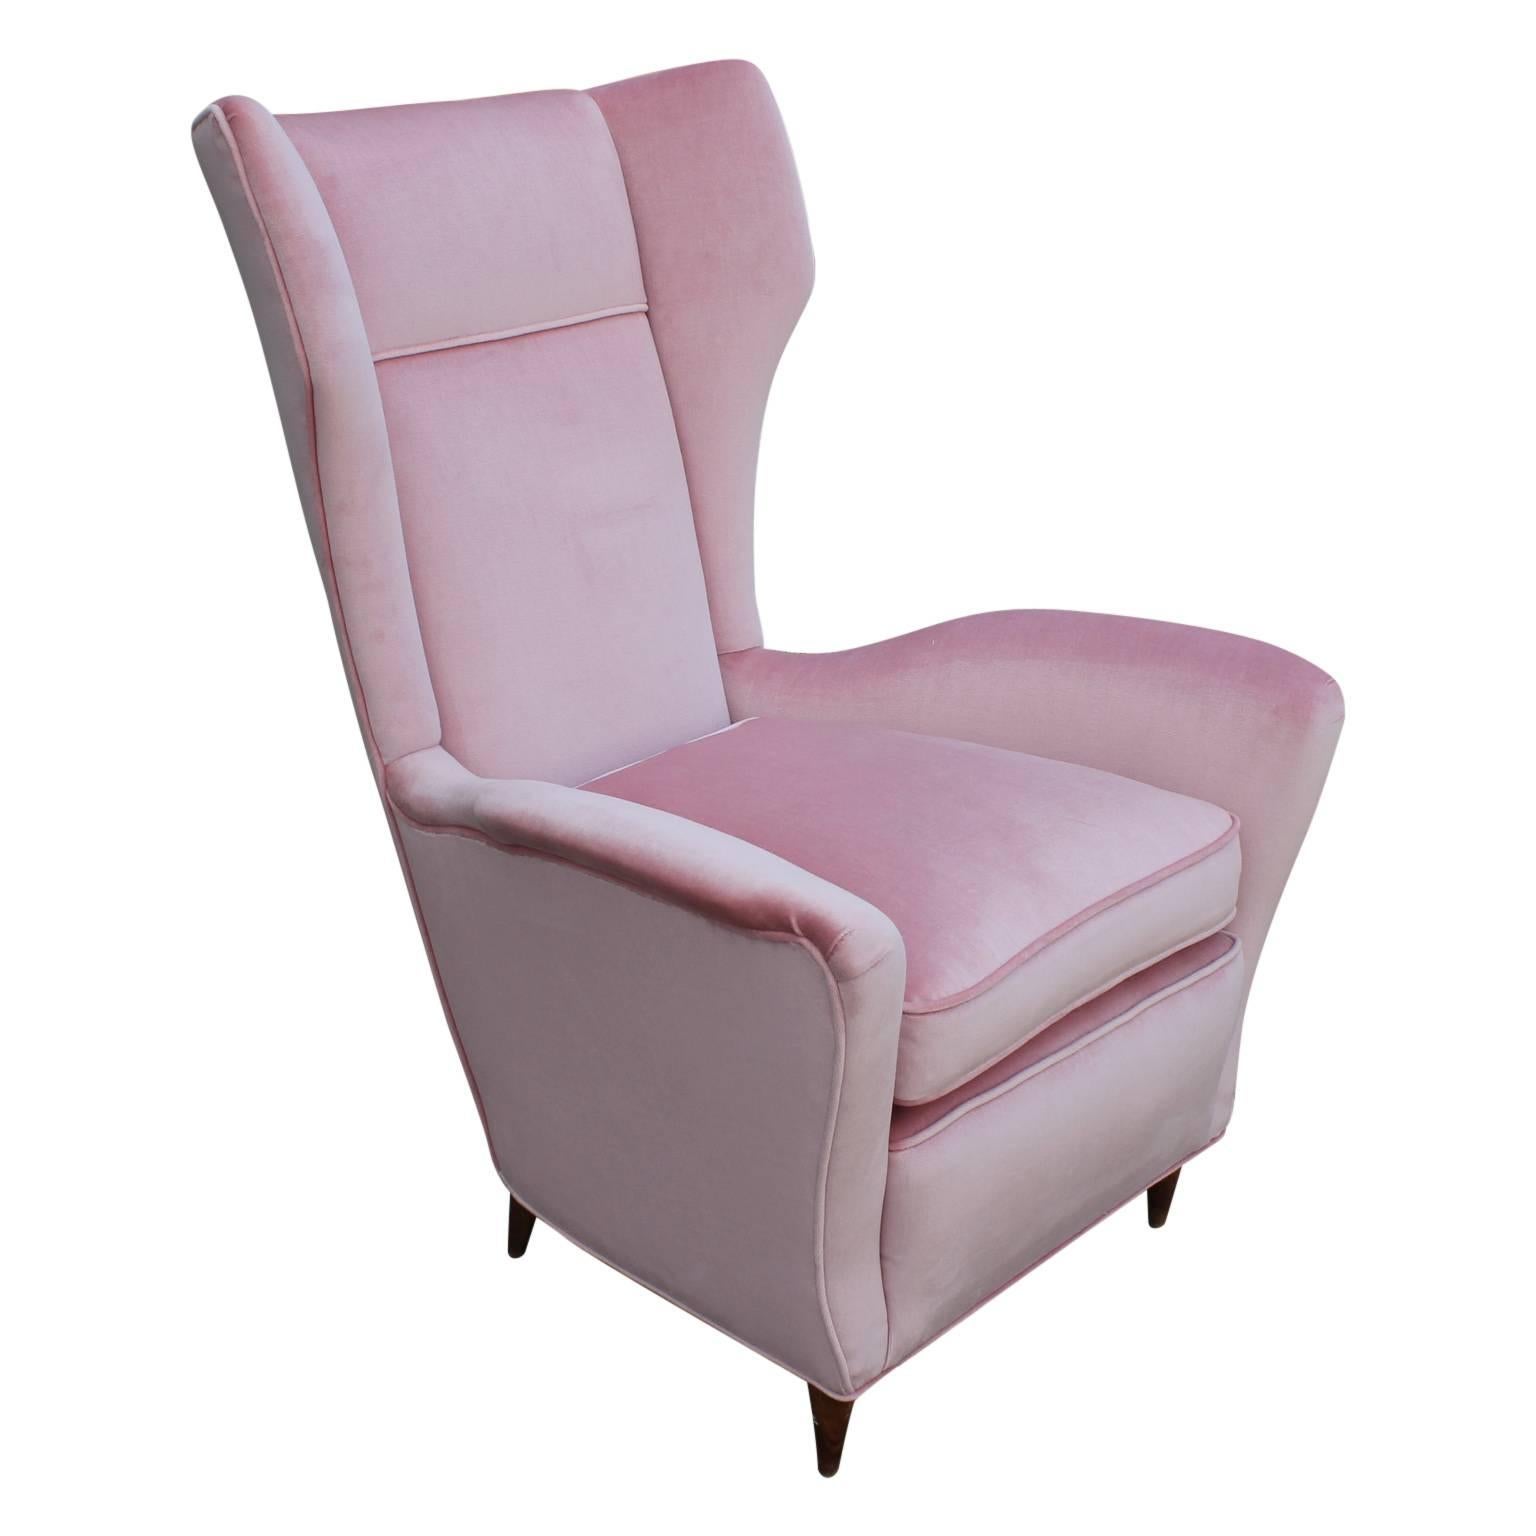 Mid-20th Century Pair of Italian Modern Wingback Chairs in Light Pink Velvet